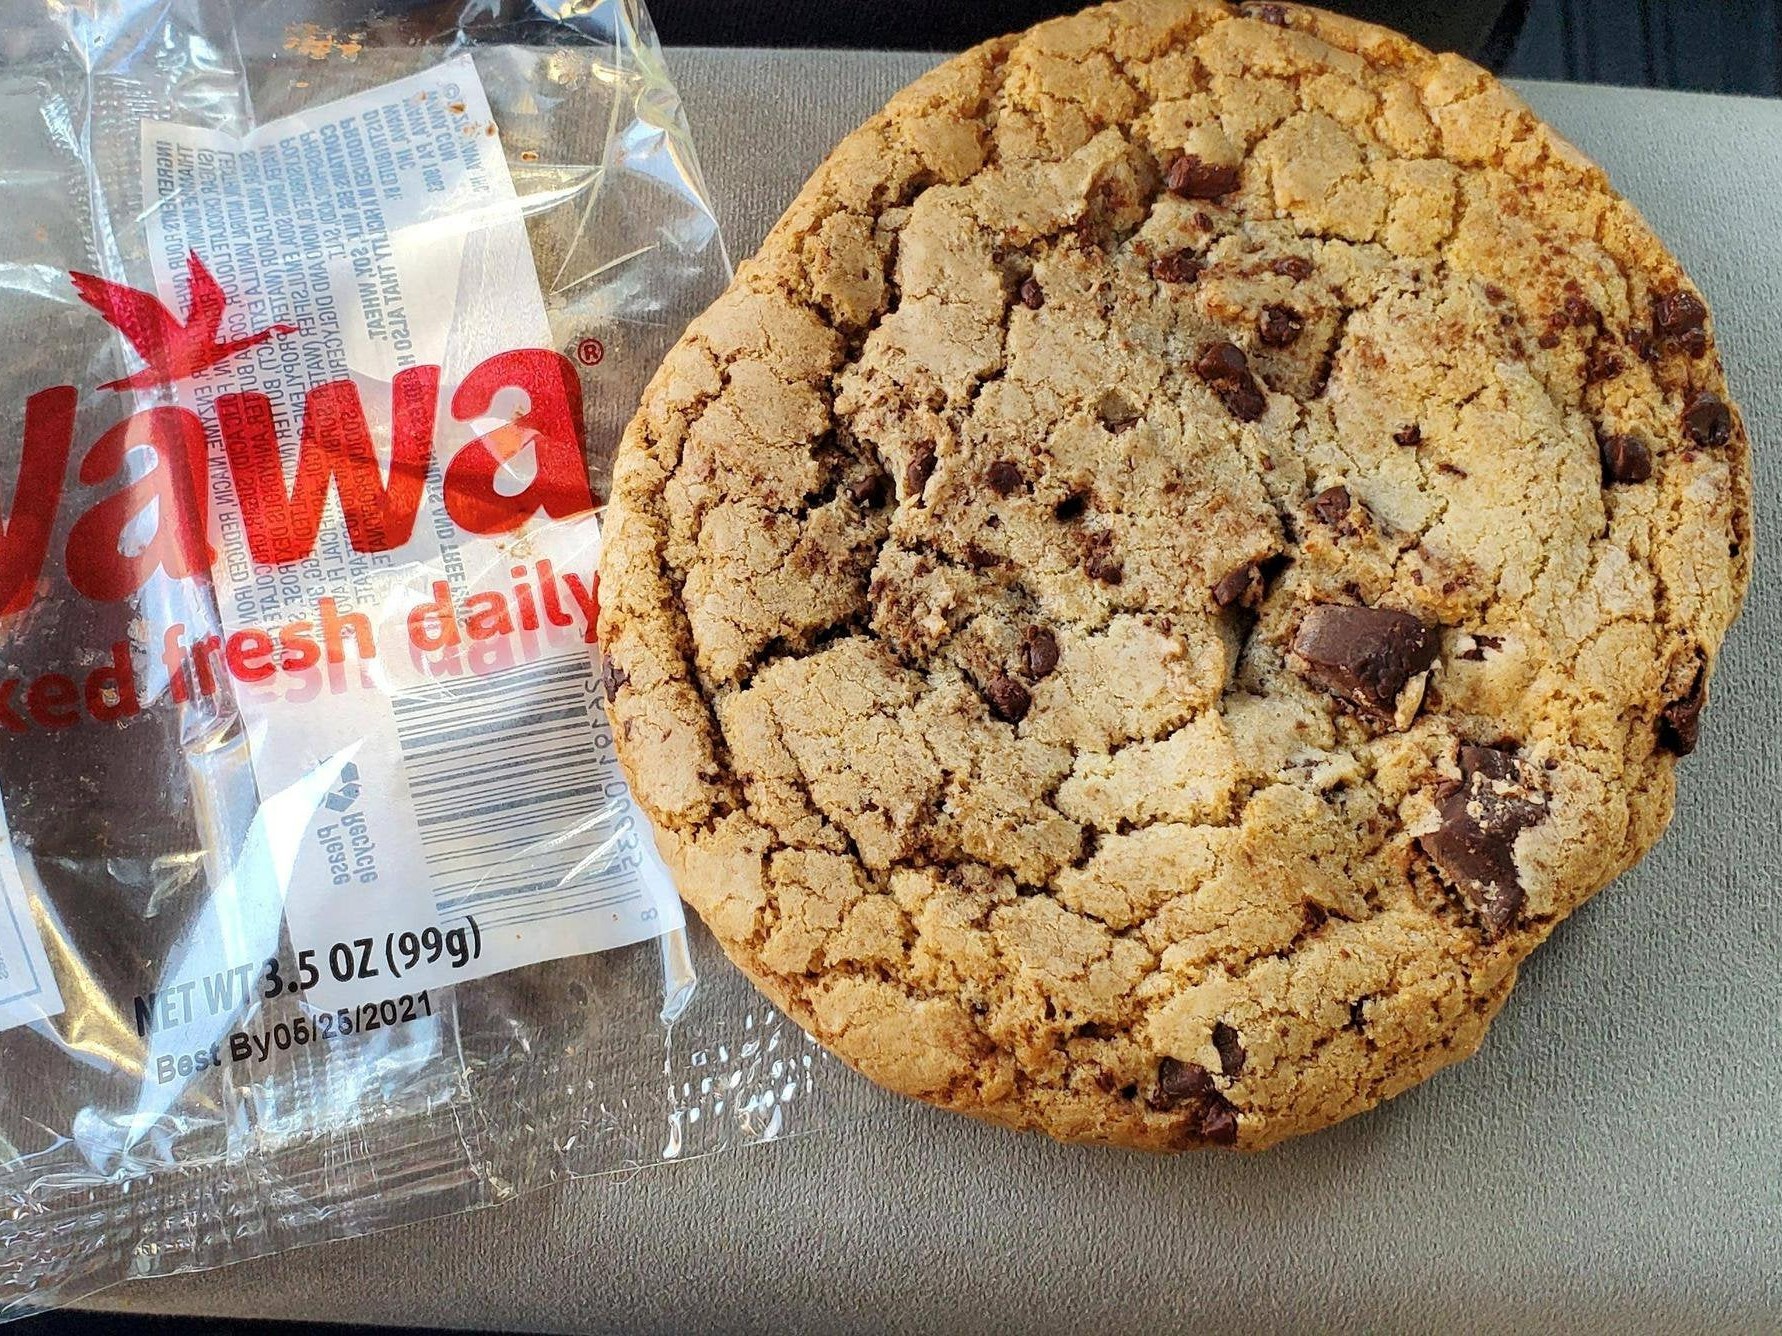 Photo of wawa chocolate chip cookie